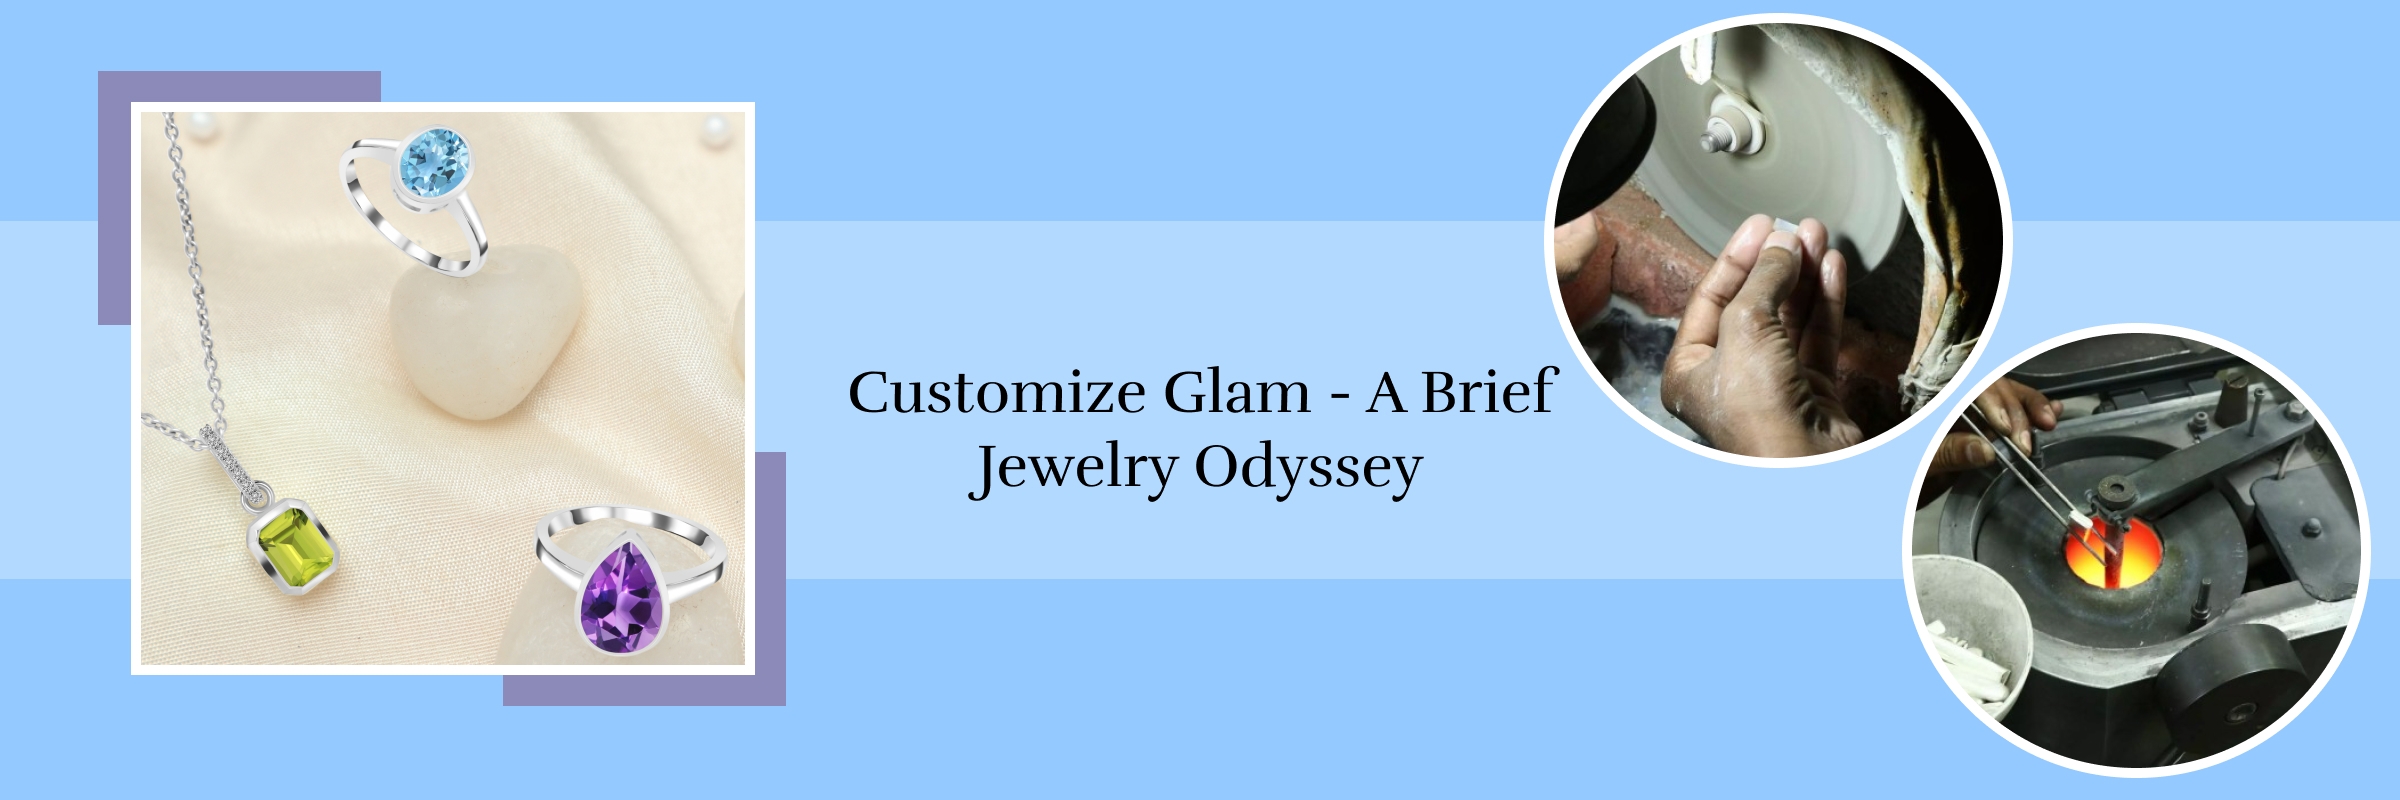 Statement Jewelry & How to Customize It